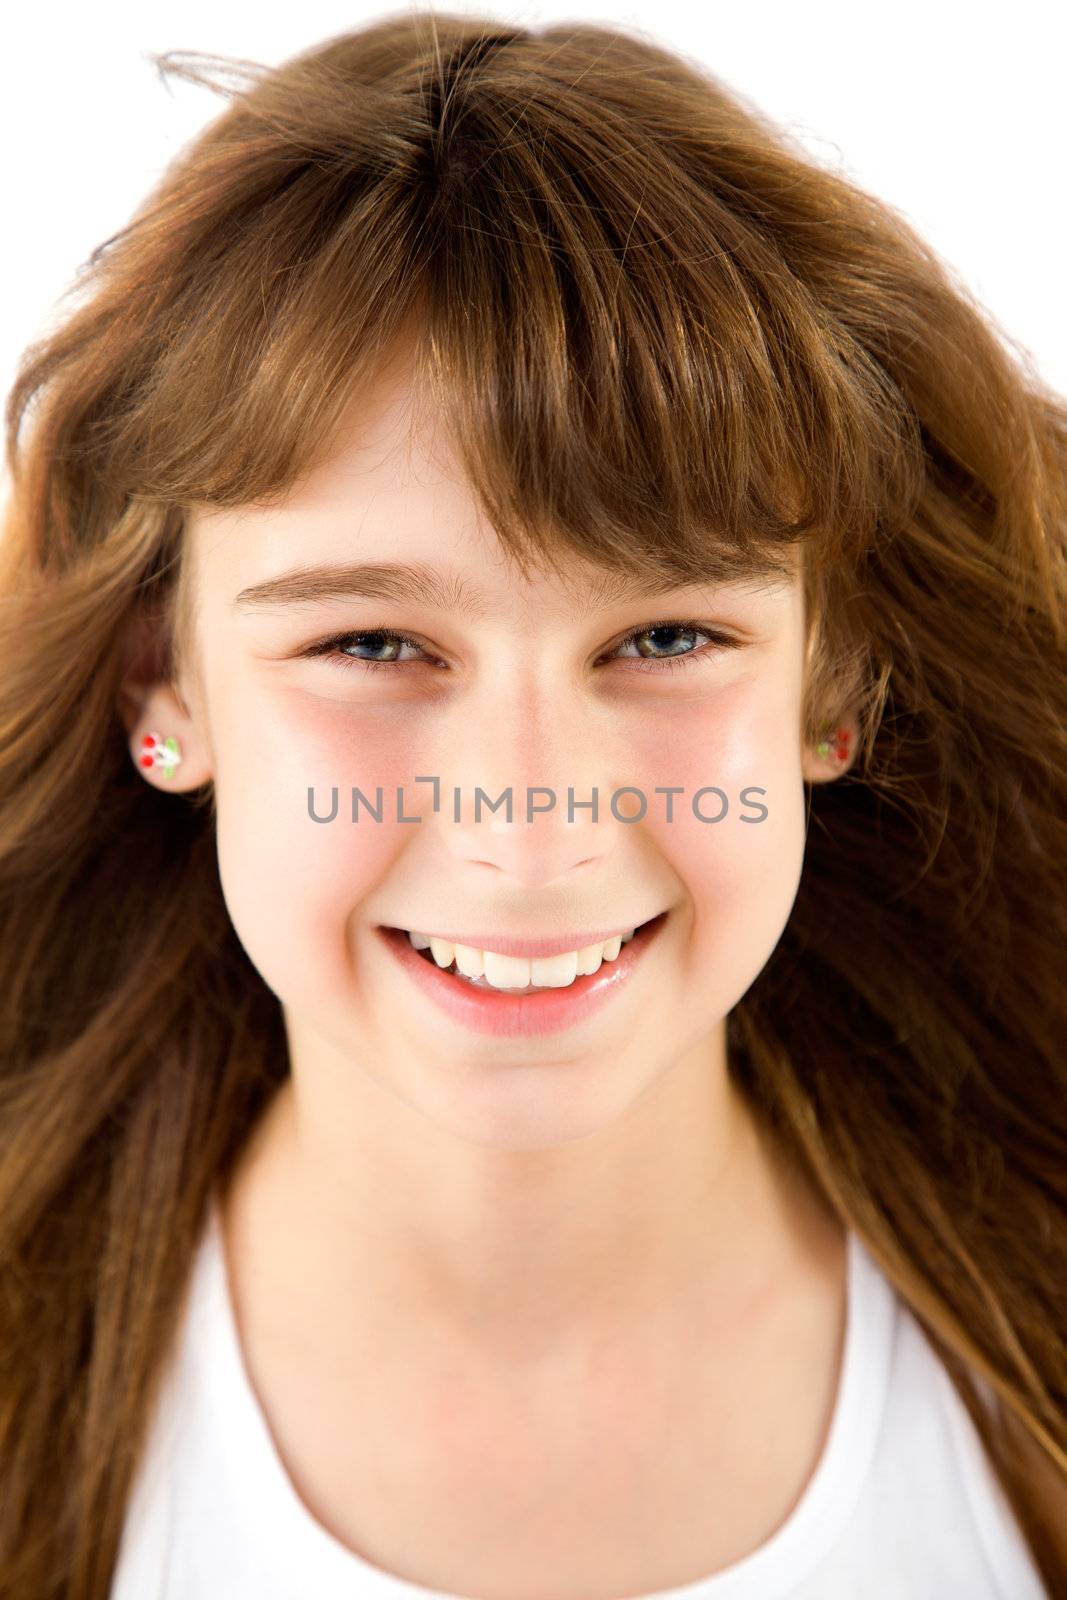 Smiling happy girl by vilevi